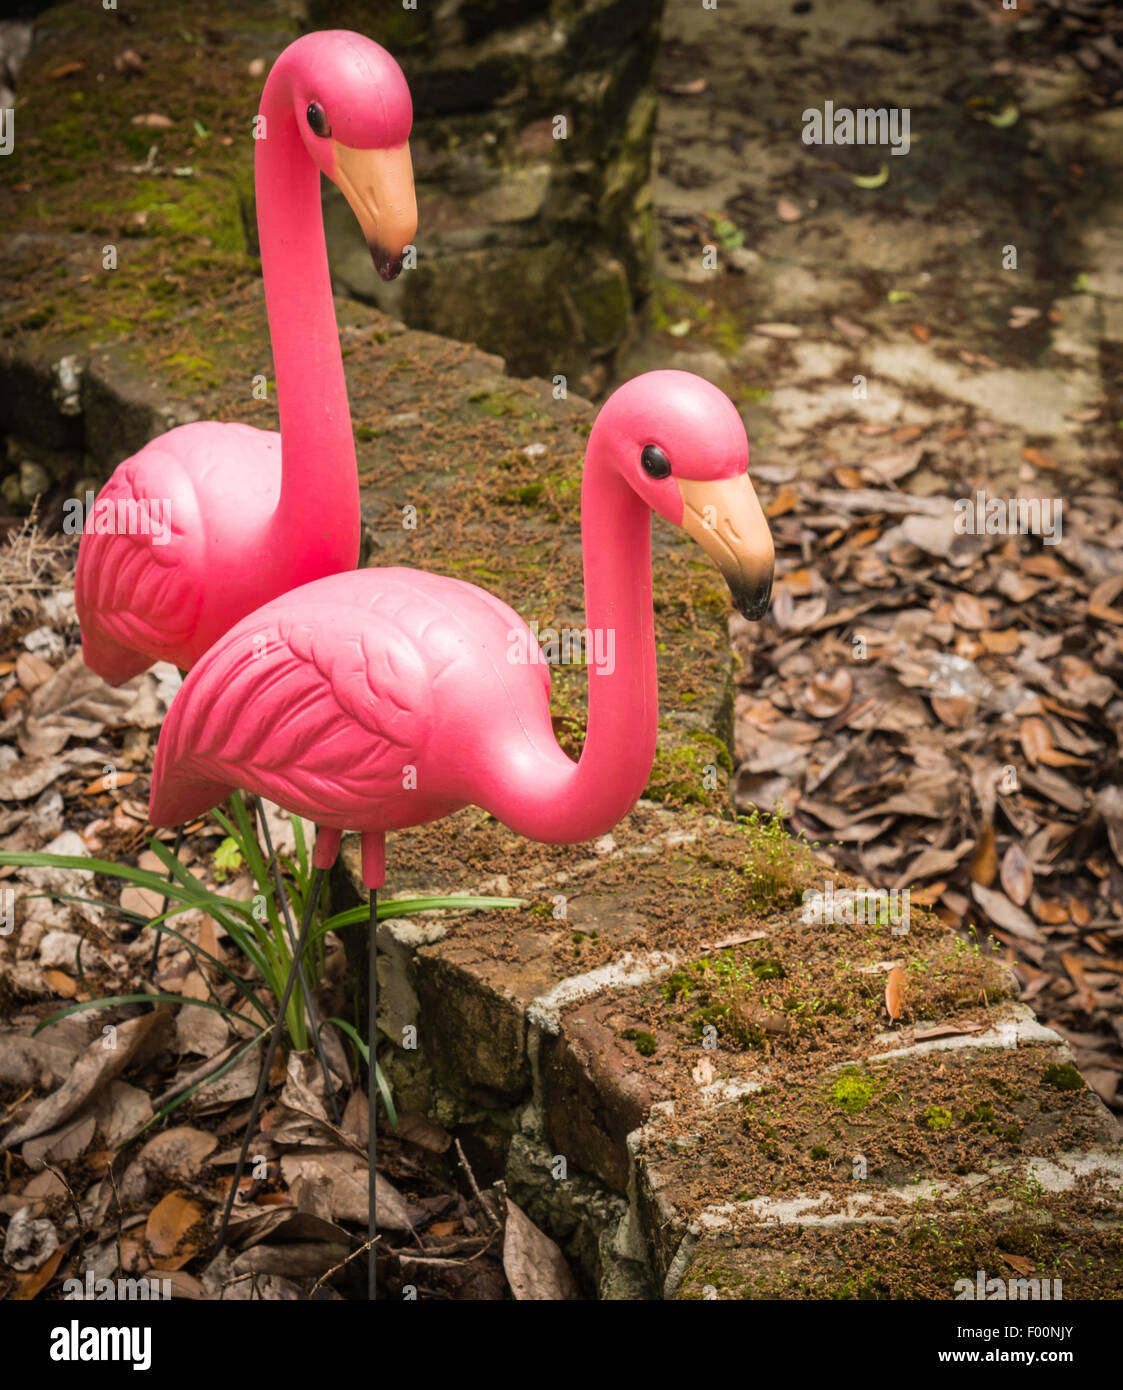 Pink Plastic Flamingos Decorate A Backyard Garden In Savannah